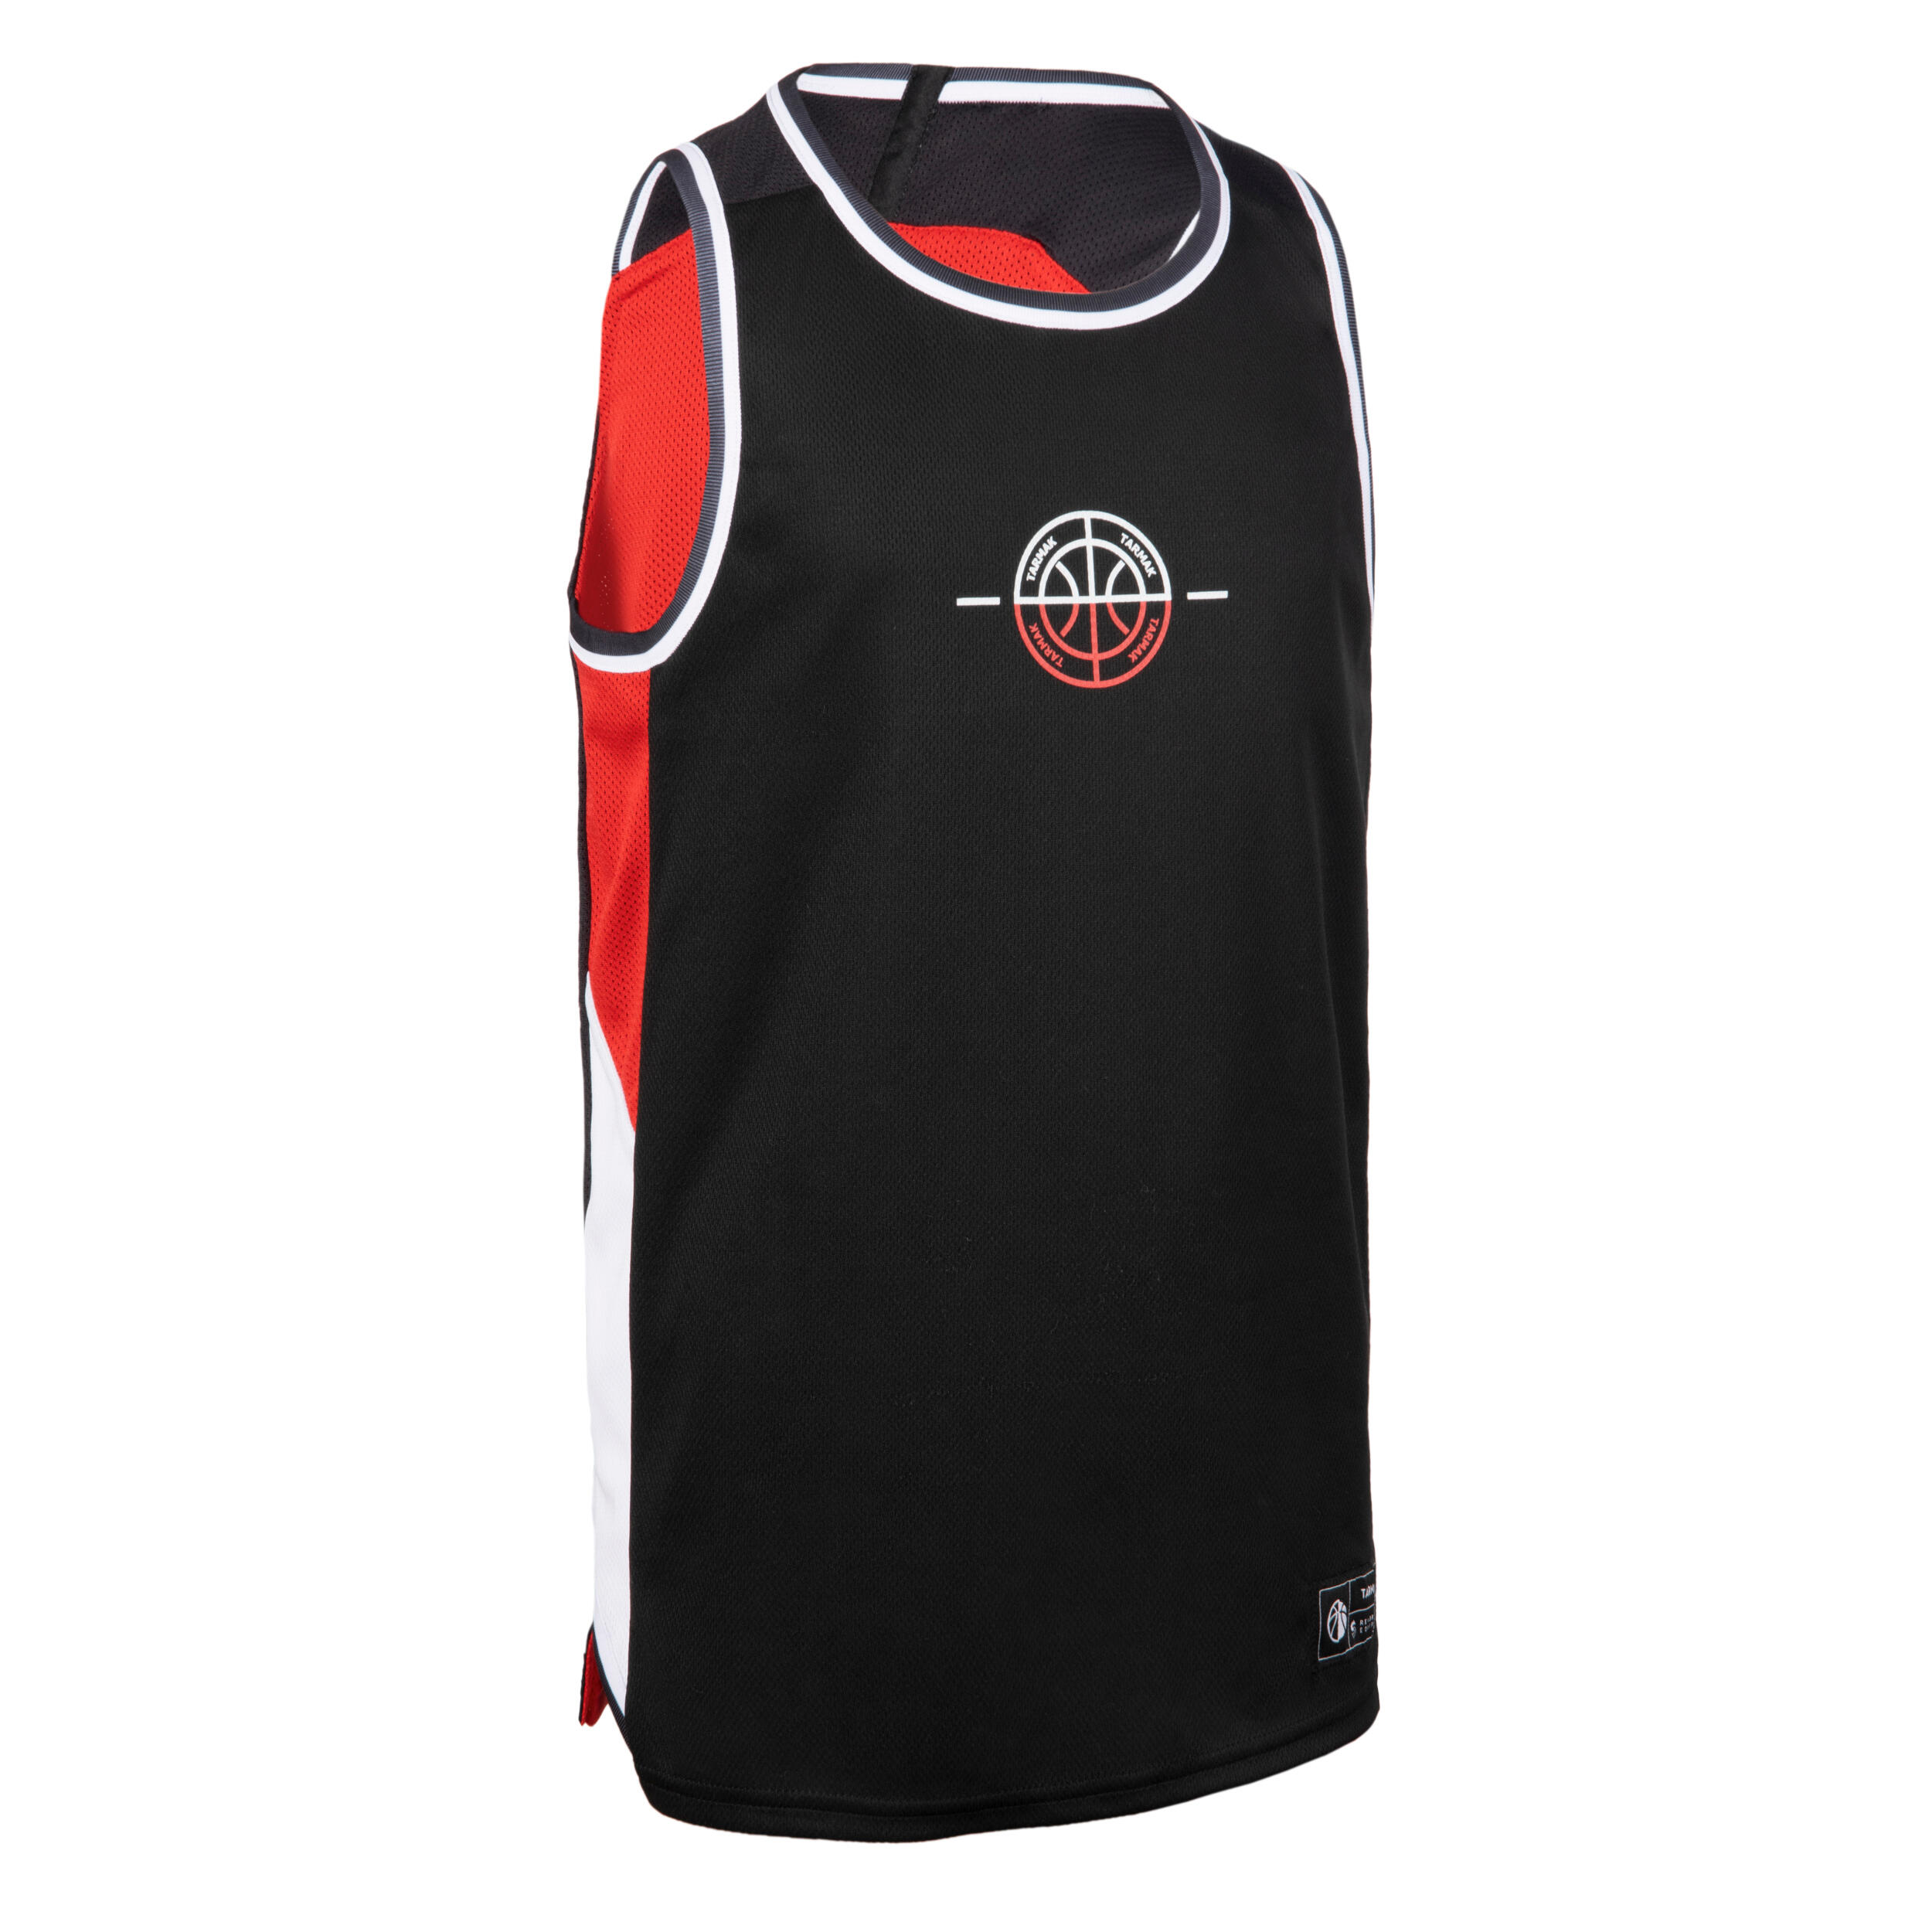 Kids' Reversible Sleeveless Basketball Jersey T500R - Red/Black 6/11